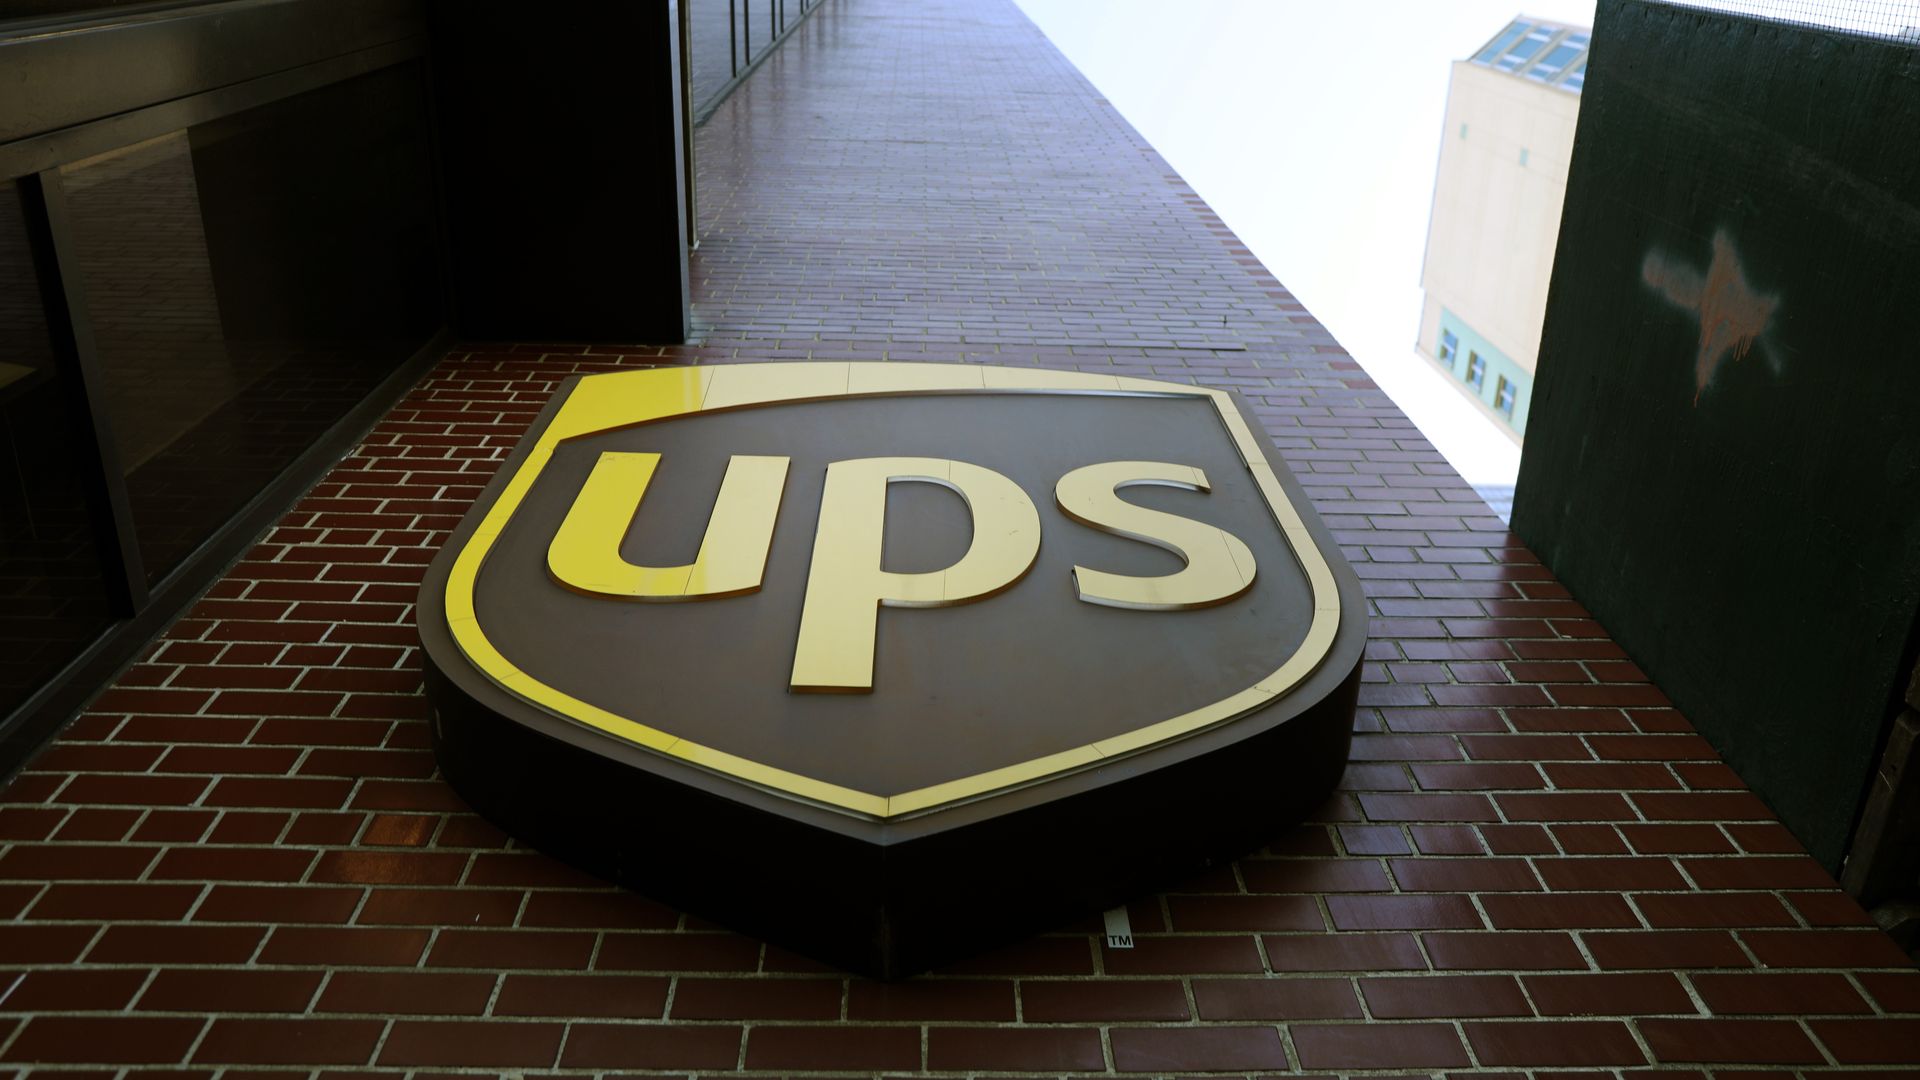 the UPS logo.